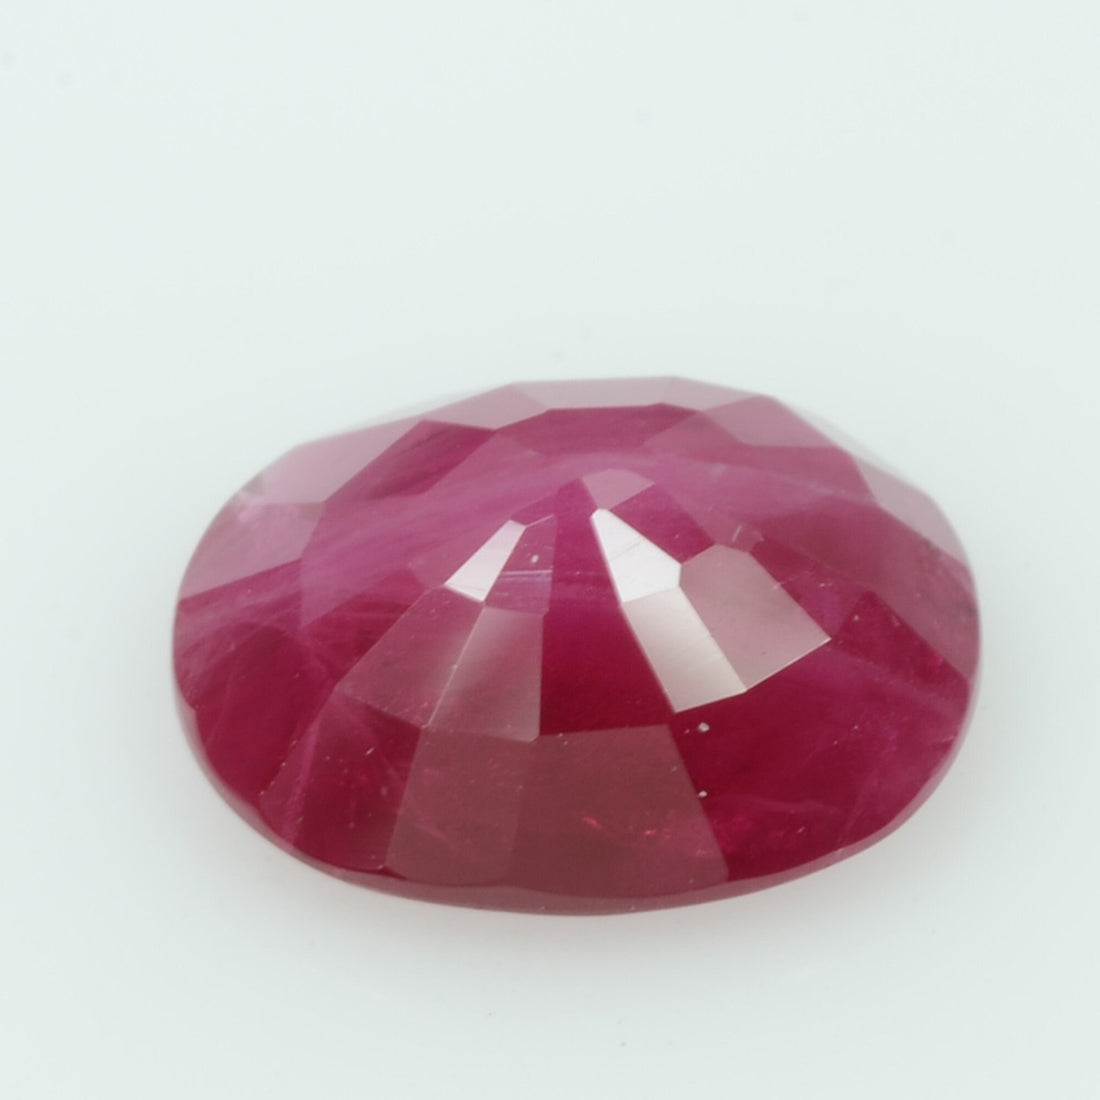 2.15 cts Natural Burma Ruby Loose Gemstone Oval Cut